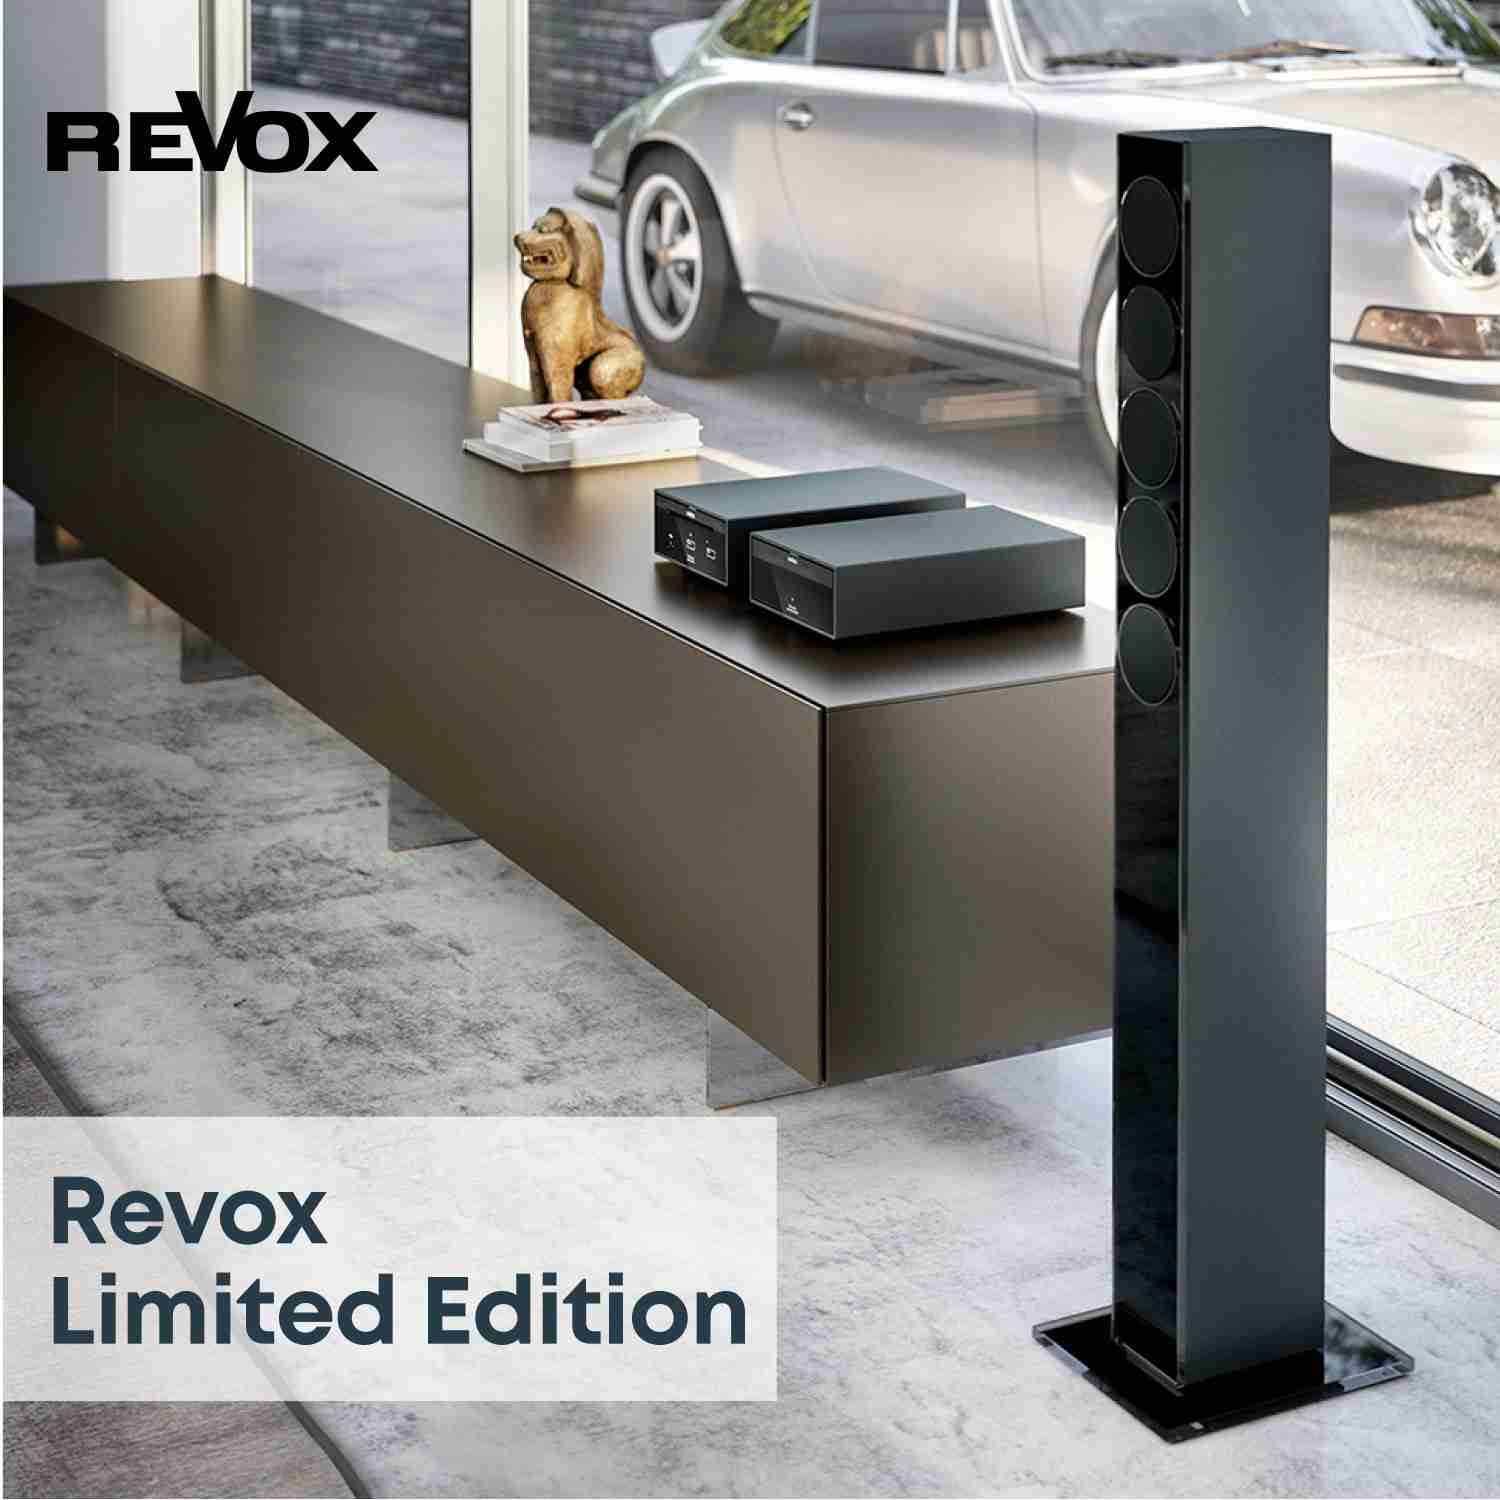 HiFi Revox Limited Edition - News, Bild 2